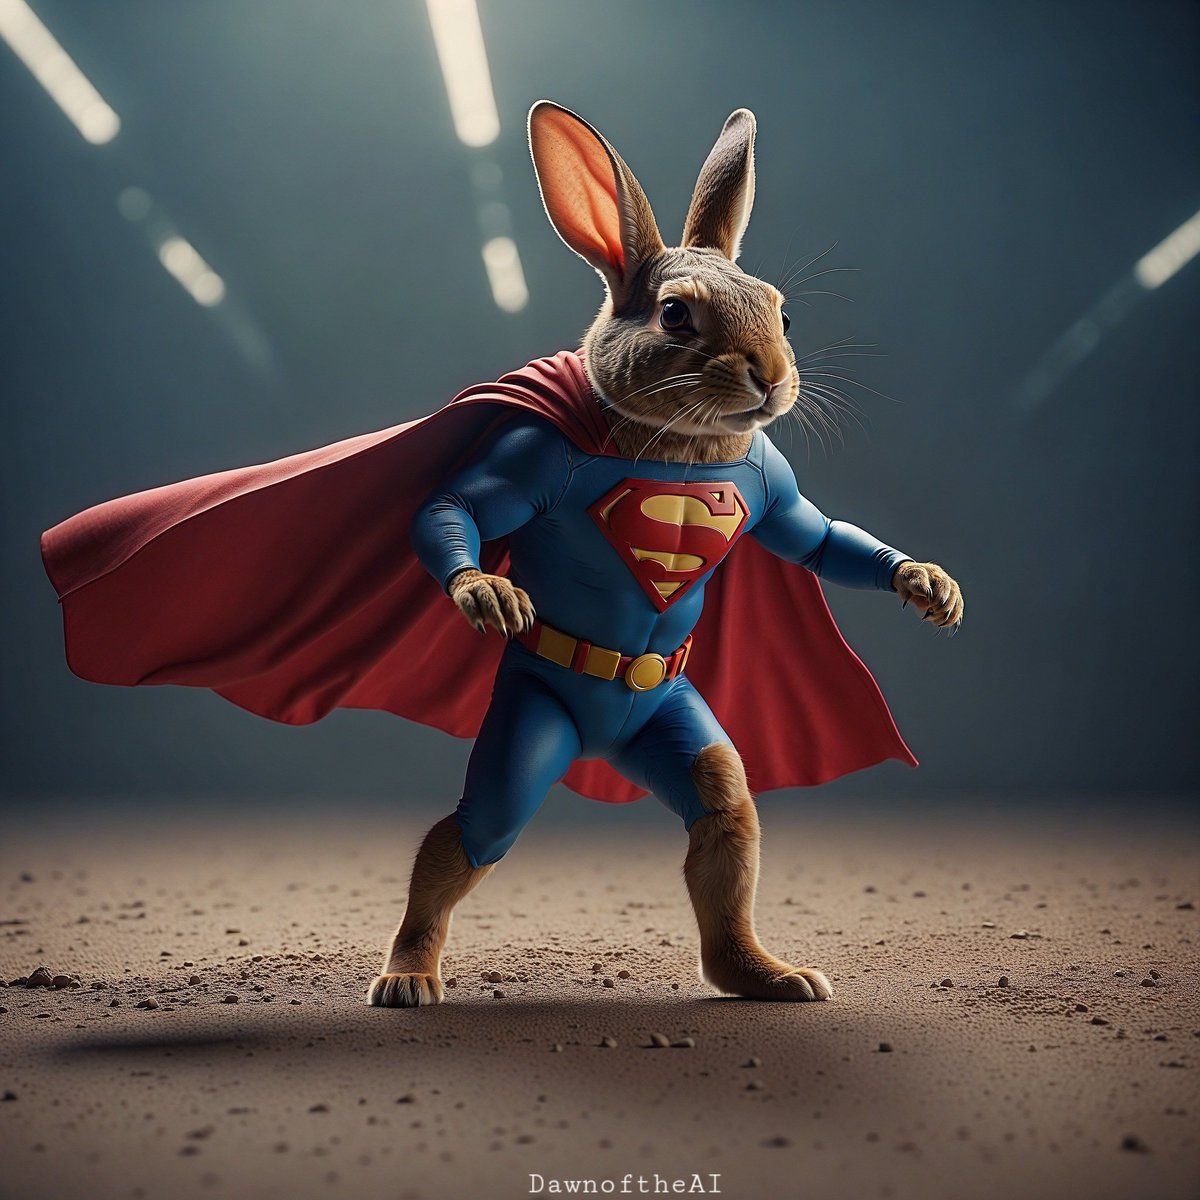 Super rabbit 🐇

#rabbitlovers #rabbitman #rabbits 
#aiworld #aiillustration #aiartist